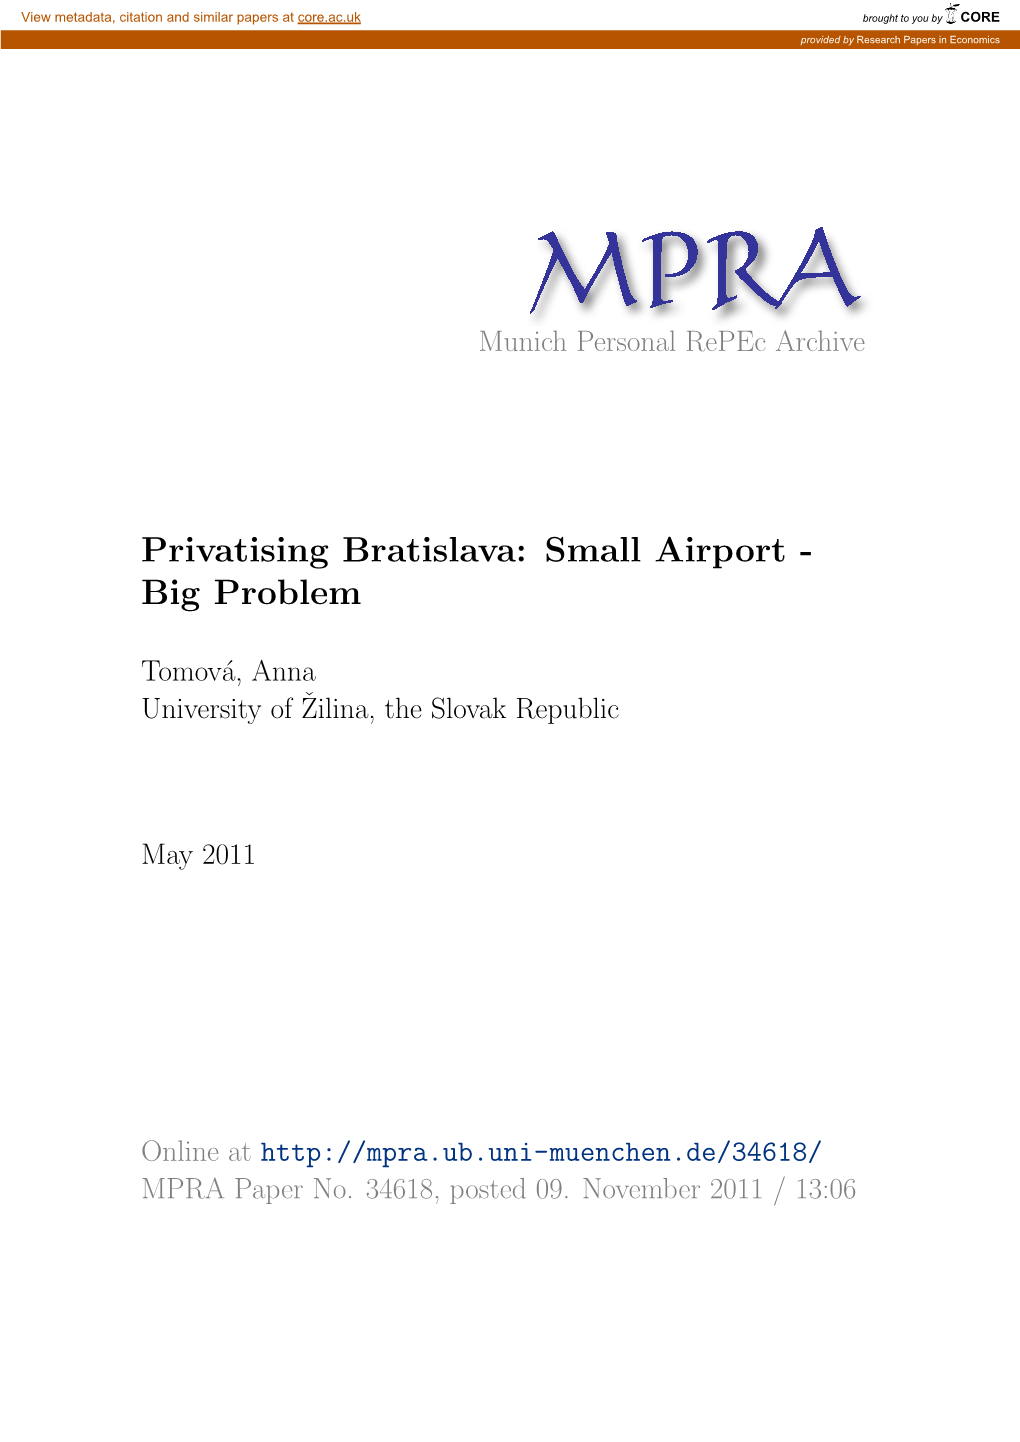 Privatising Bratislava: Small Airport - Big Problem